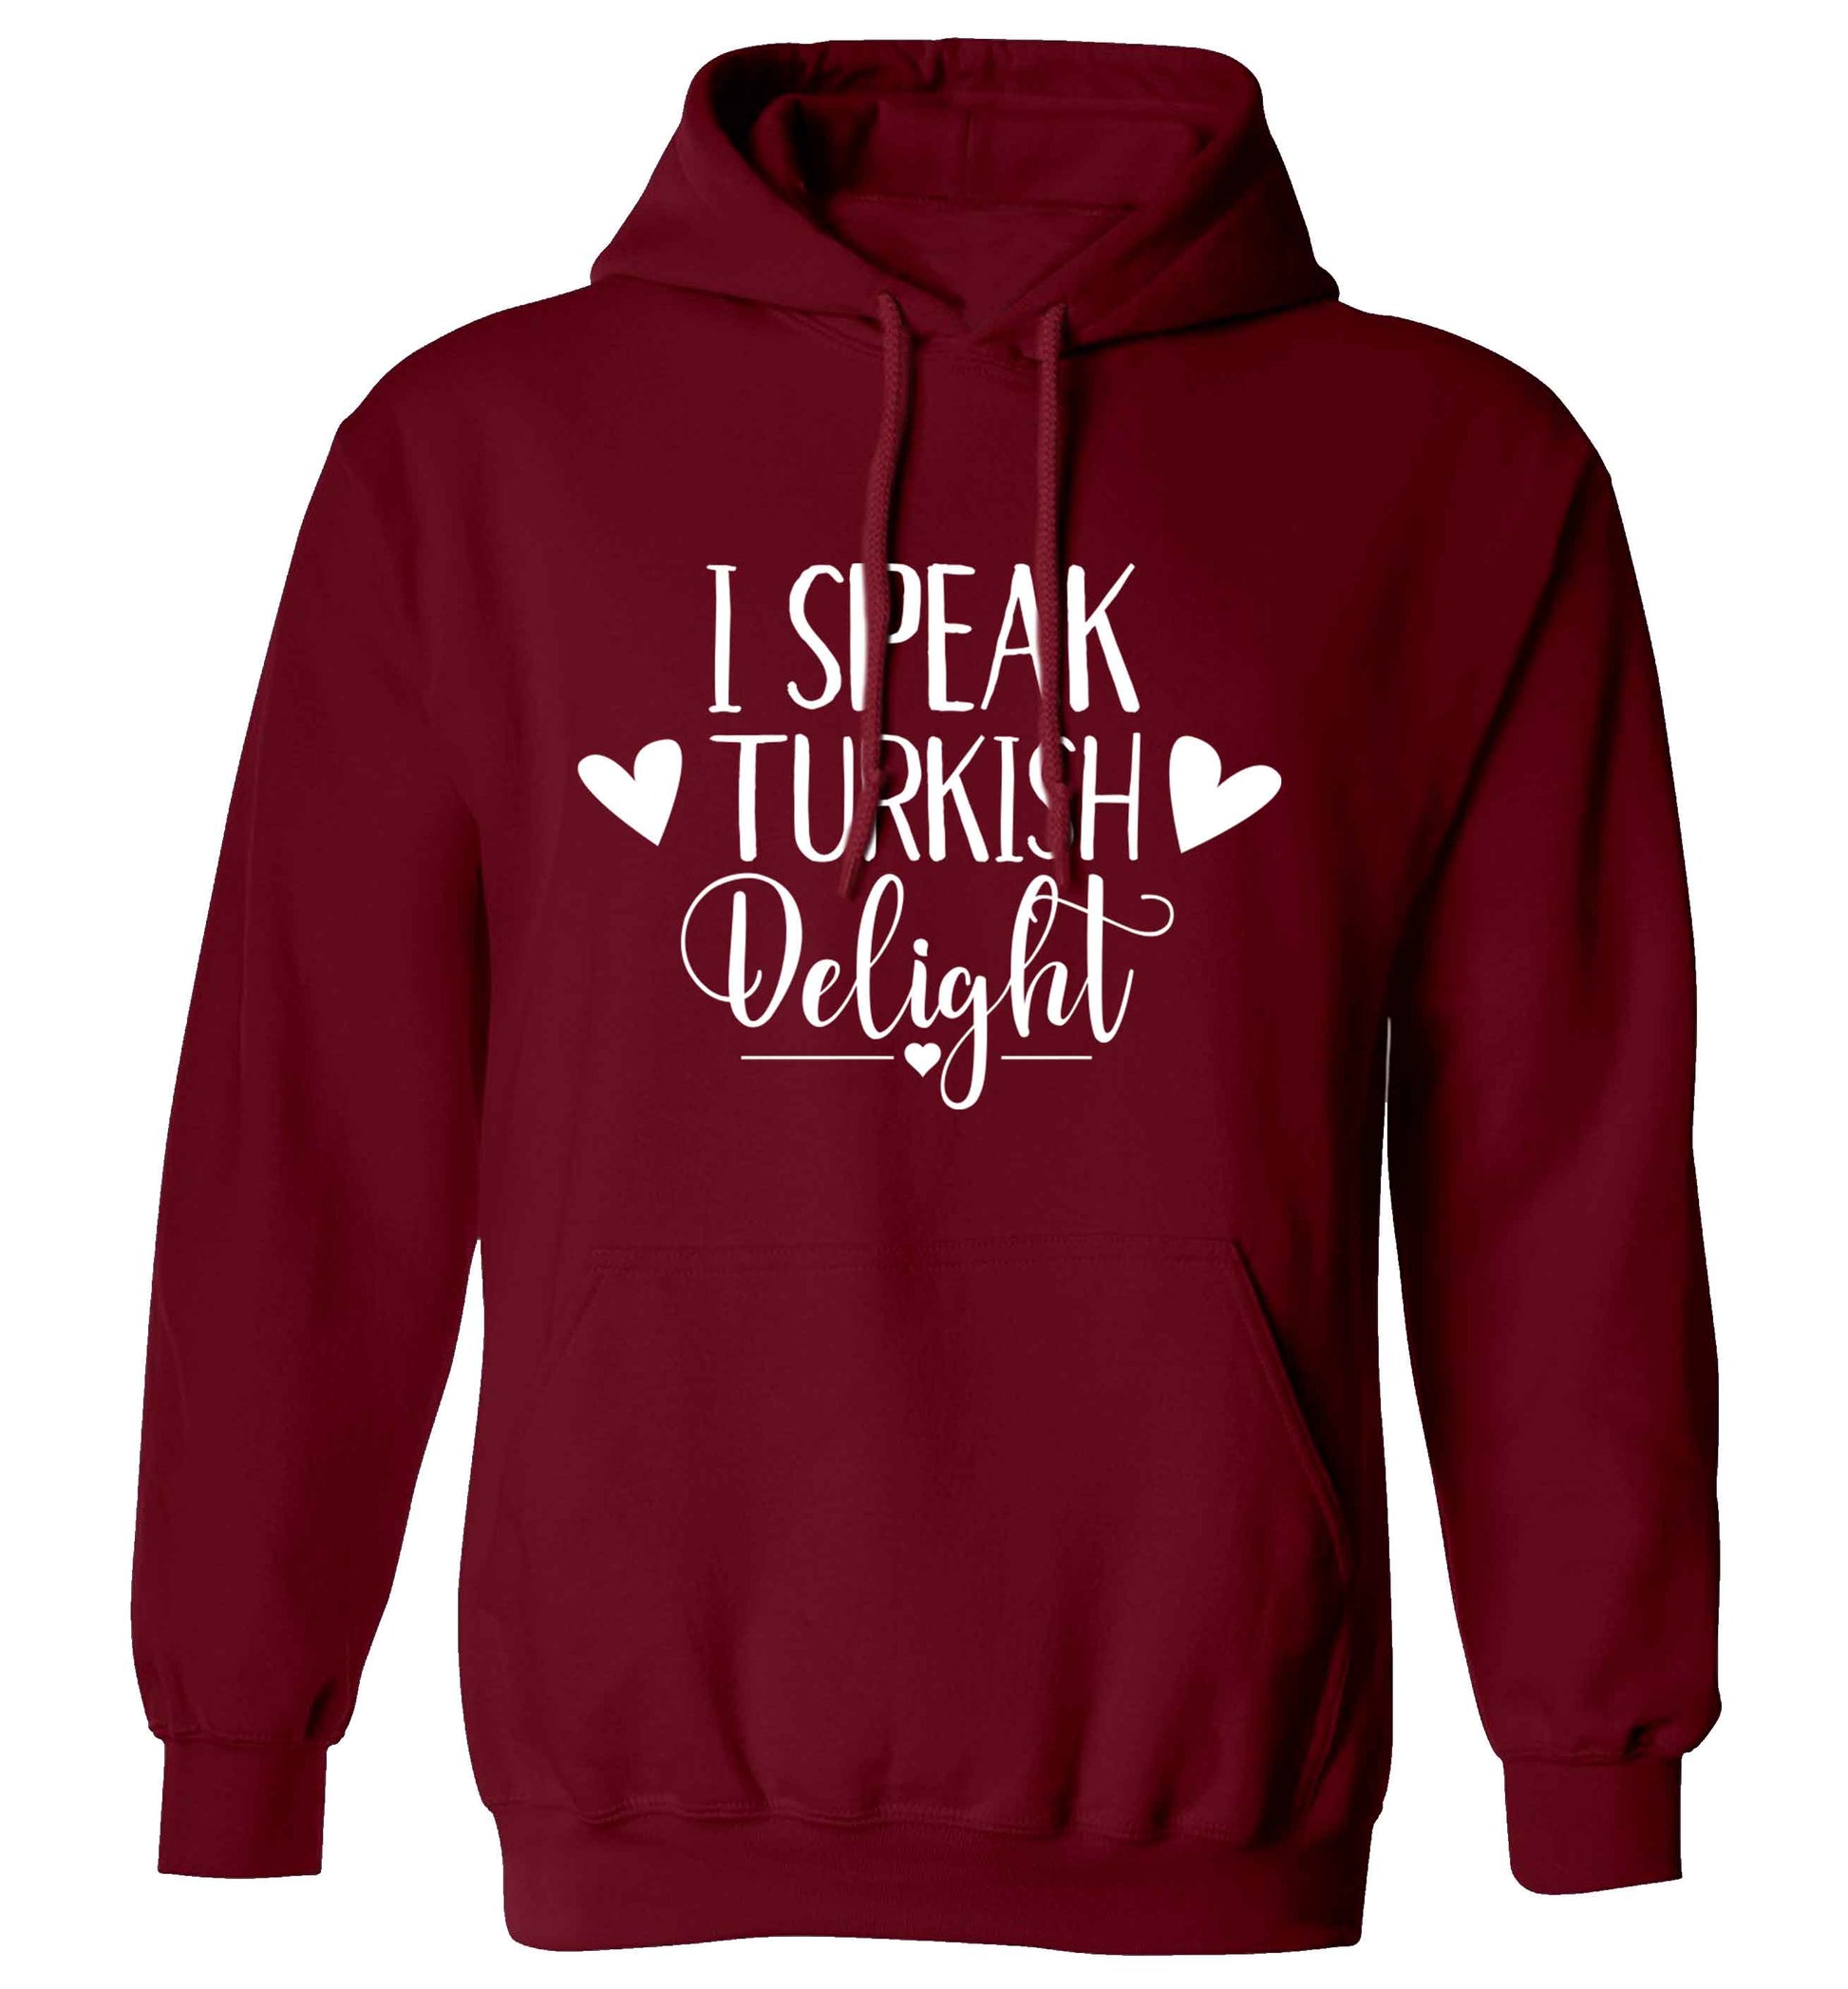 I speak turkish...delight adults unisex maroon hoodie 2XL